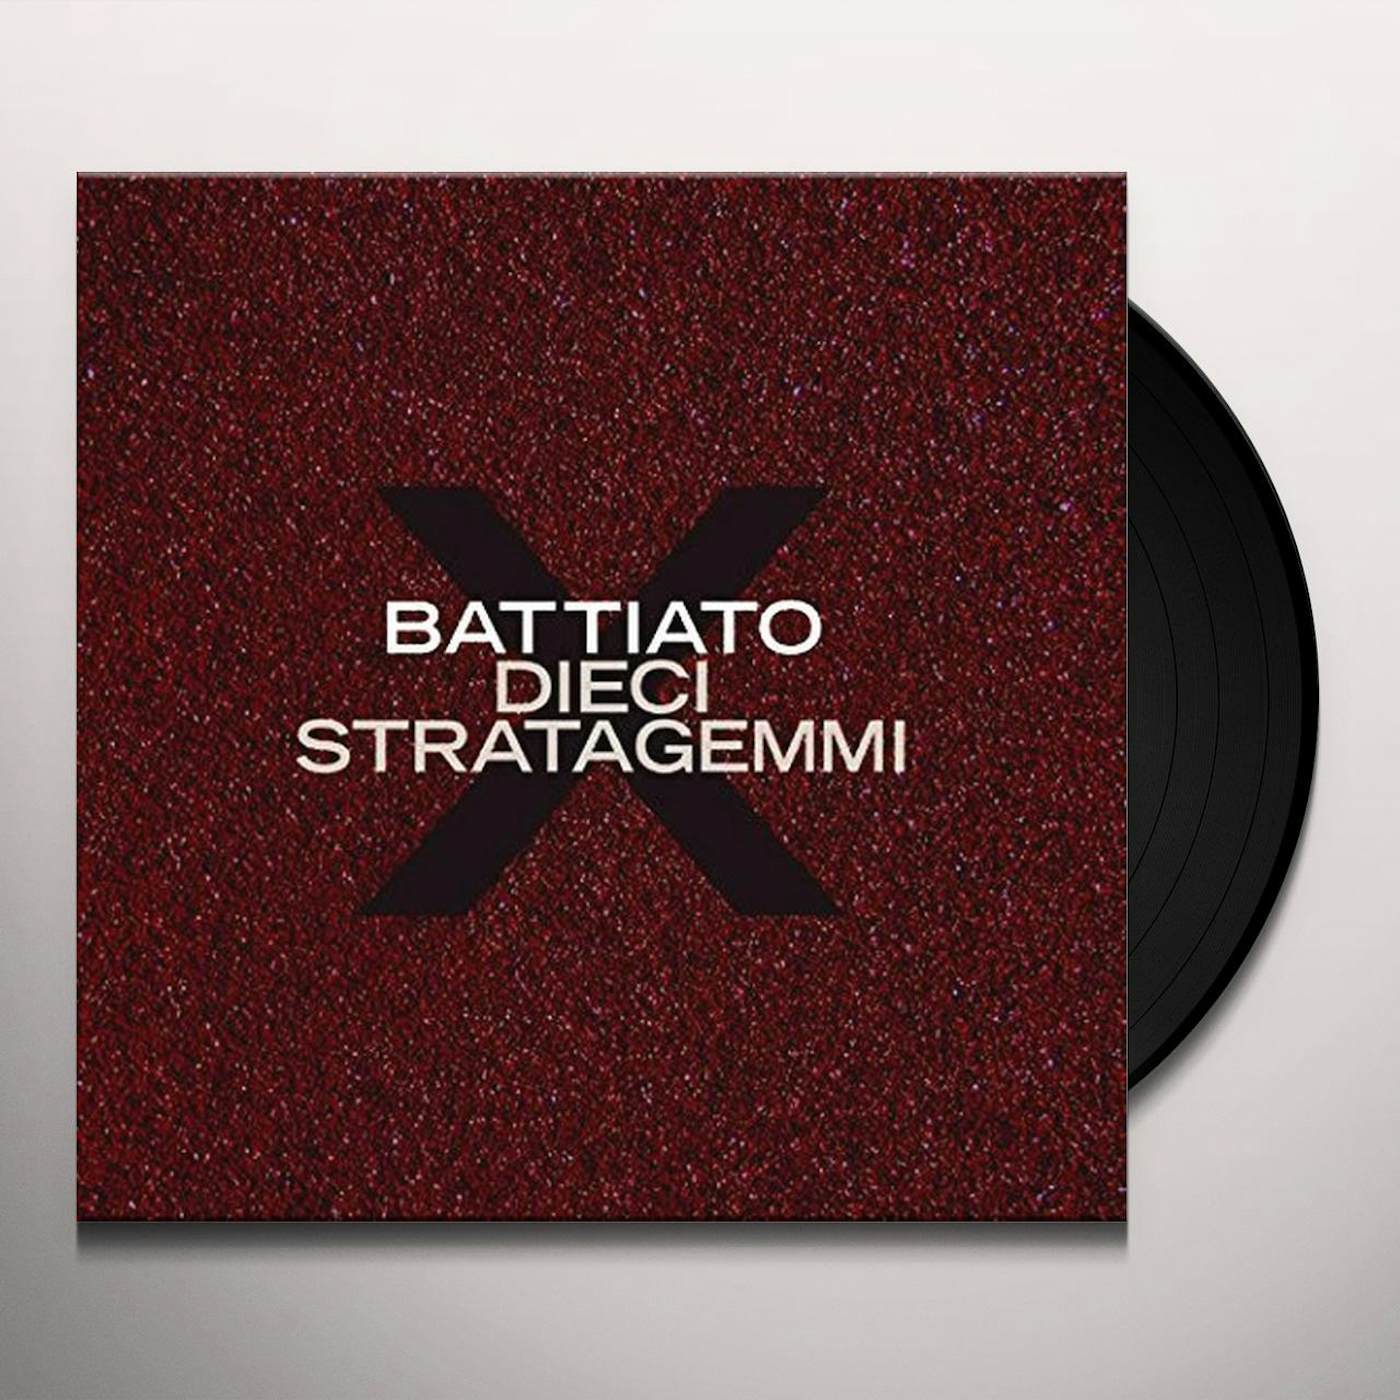 Franco Battiato Dieci stratagemmi Vinyl Record